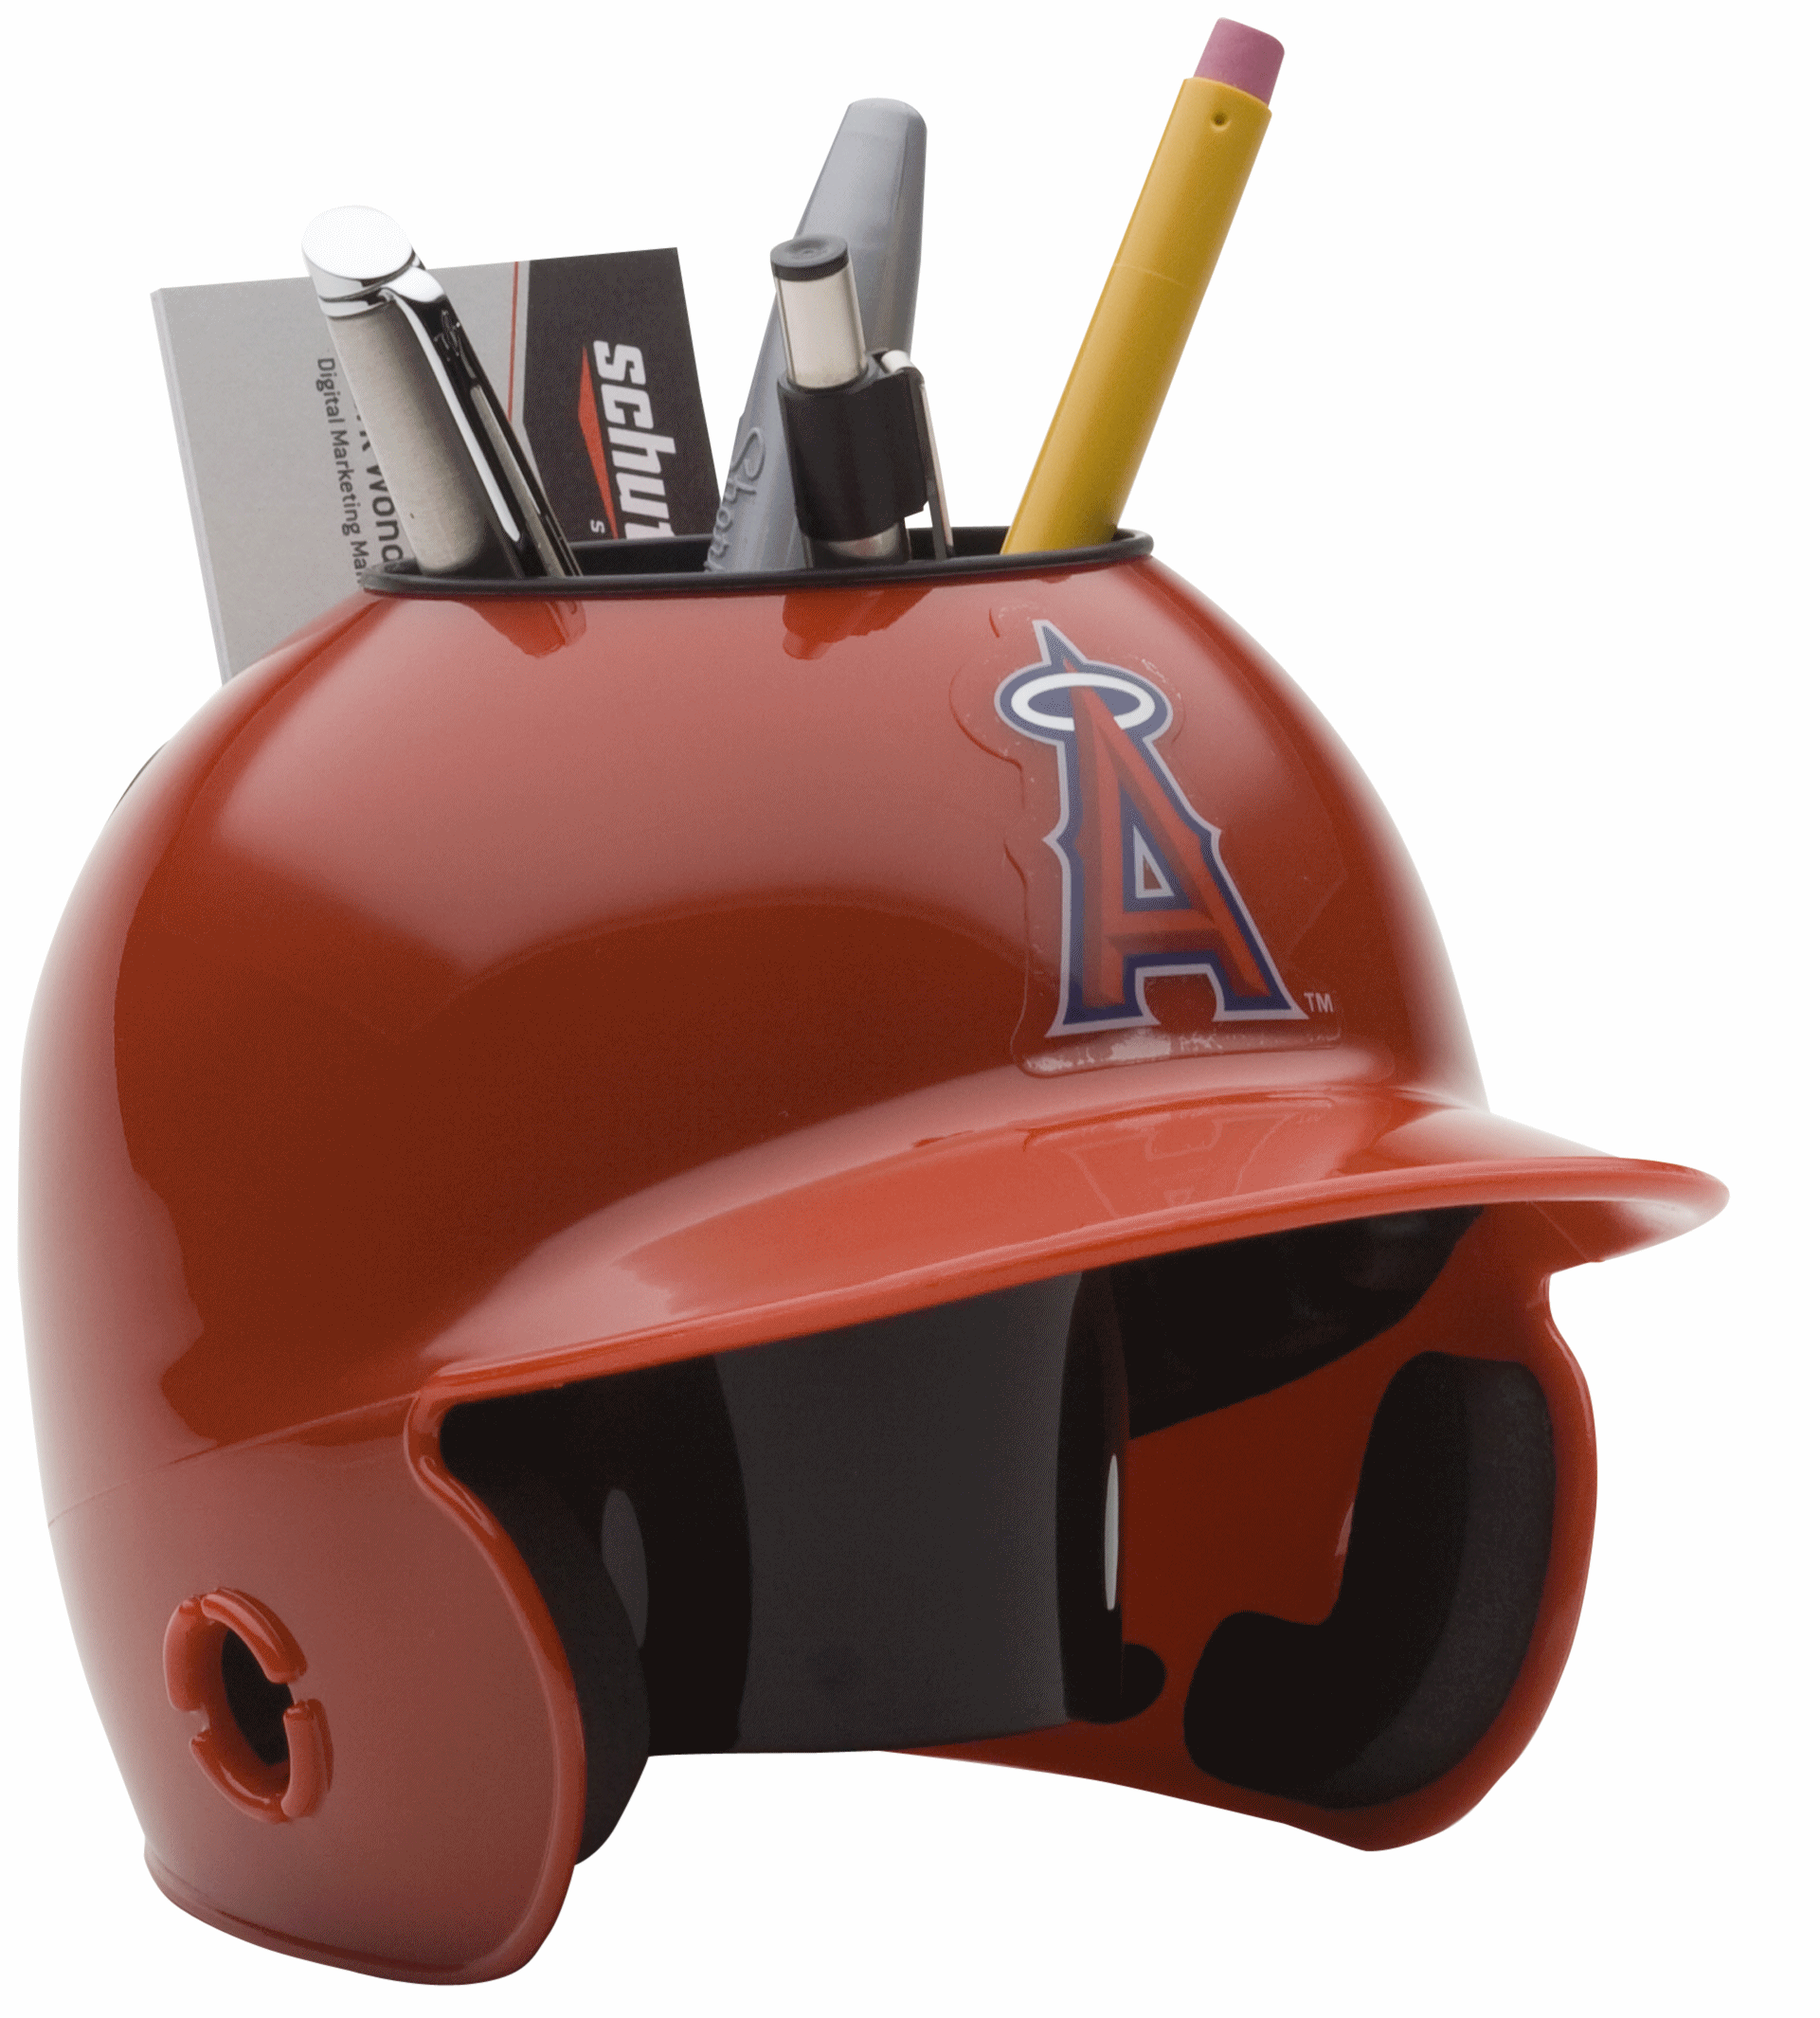 Anaheim Angels Miniature Batters Helmet Desk Caddy